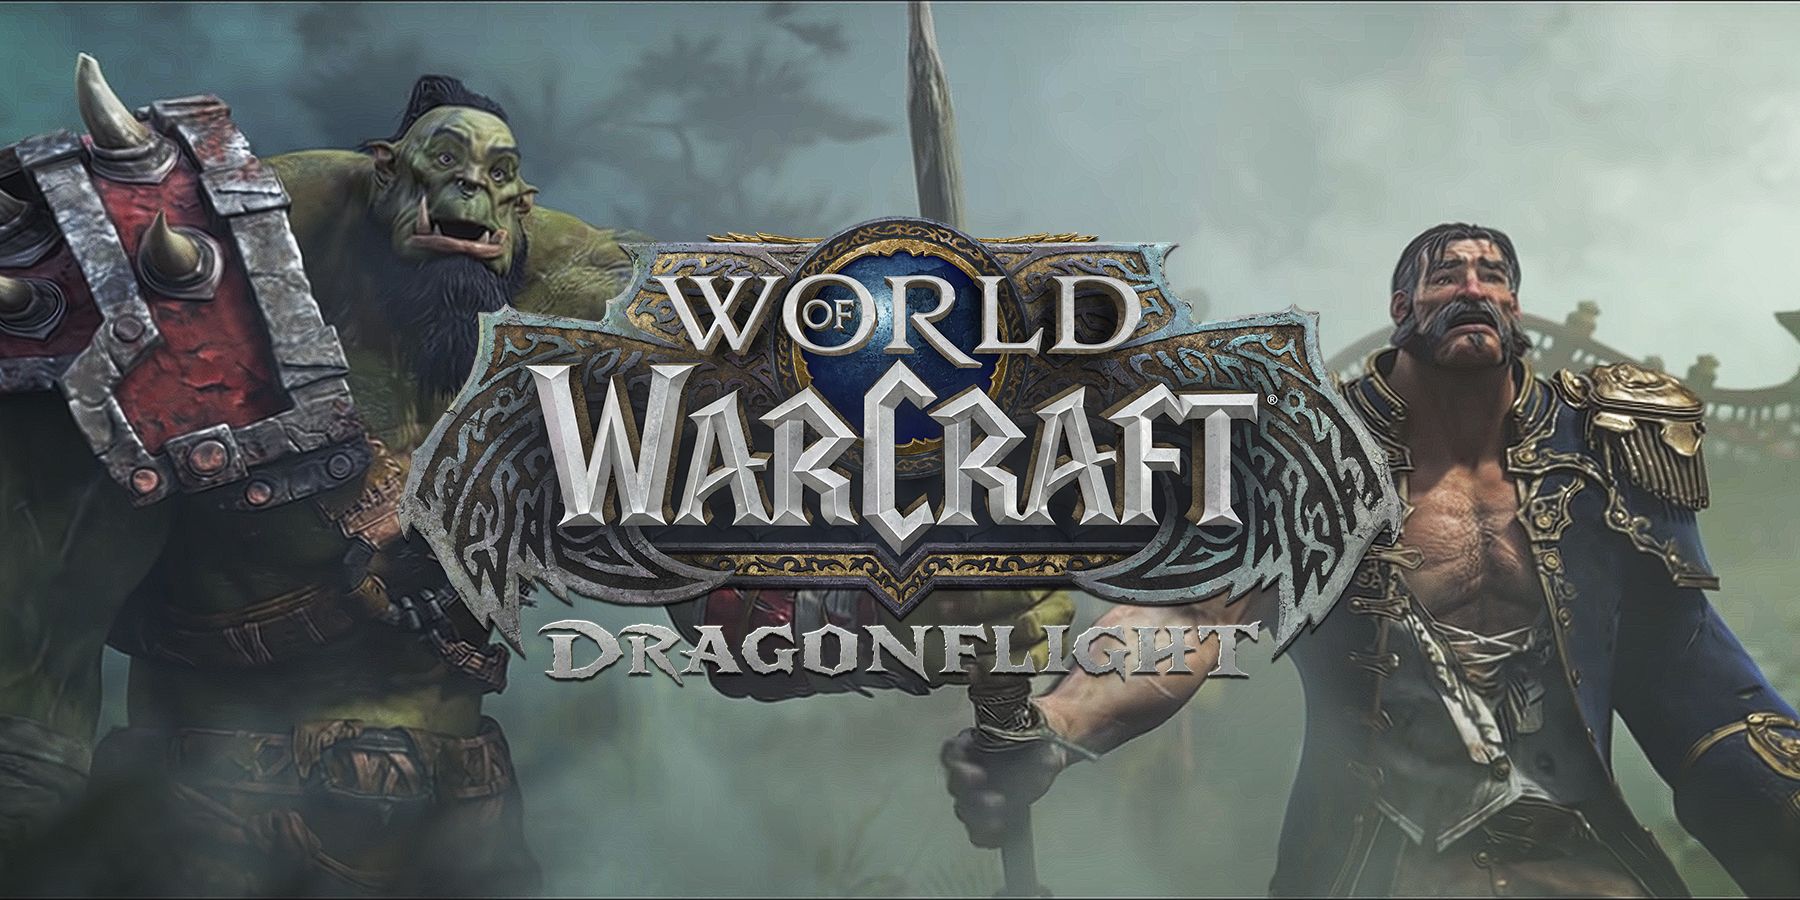 dragonflight wow world of warcraft cross faction guild ion hazzikostas